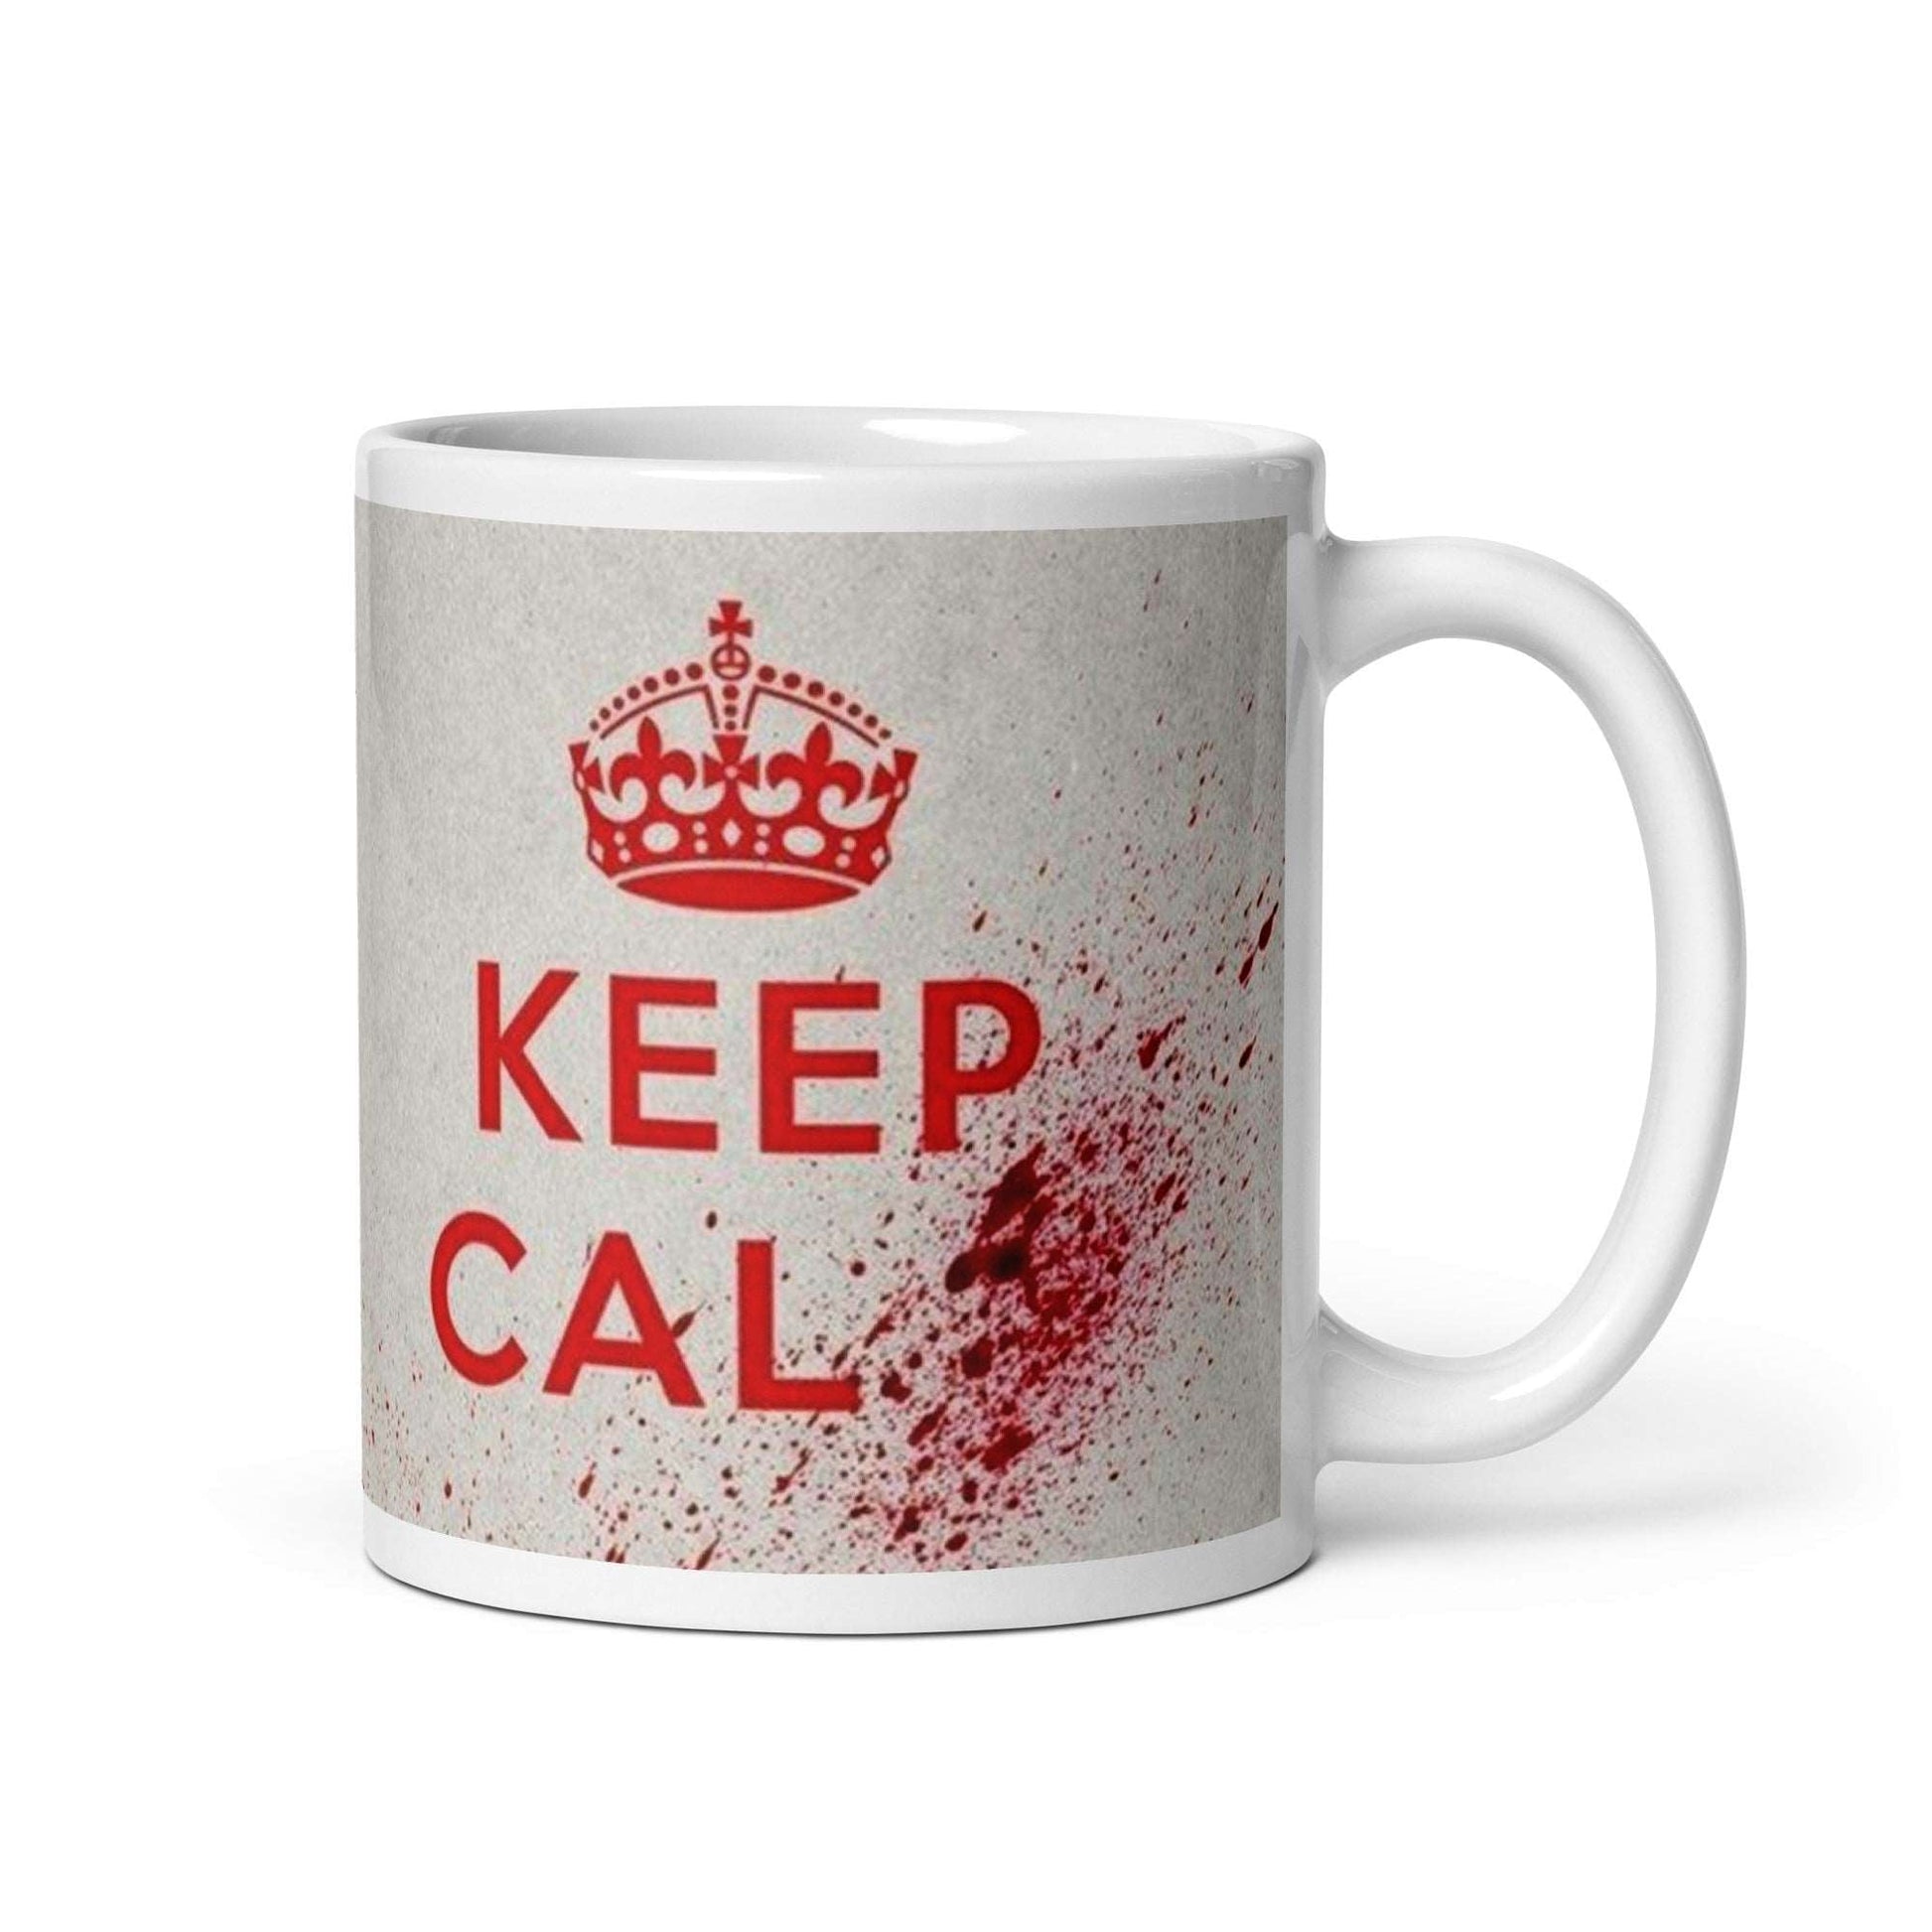 Keep Calm - glossy mug - Souled Out World